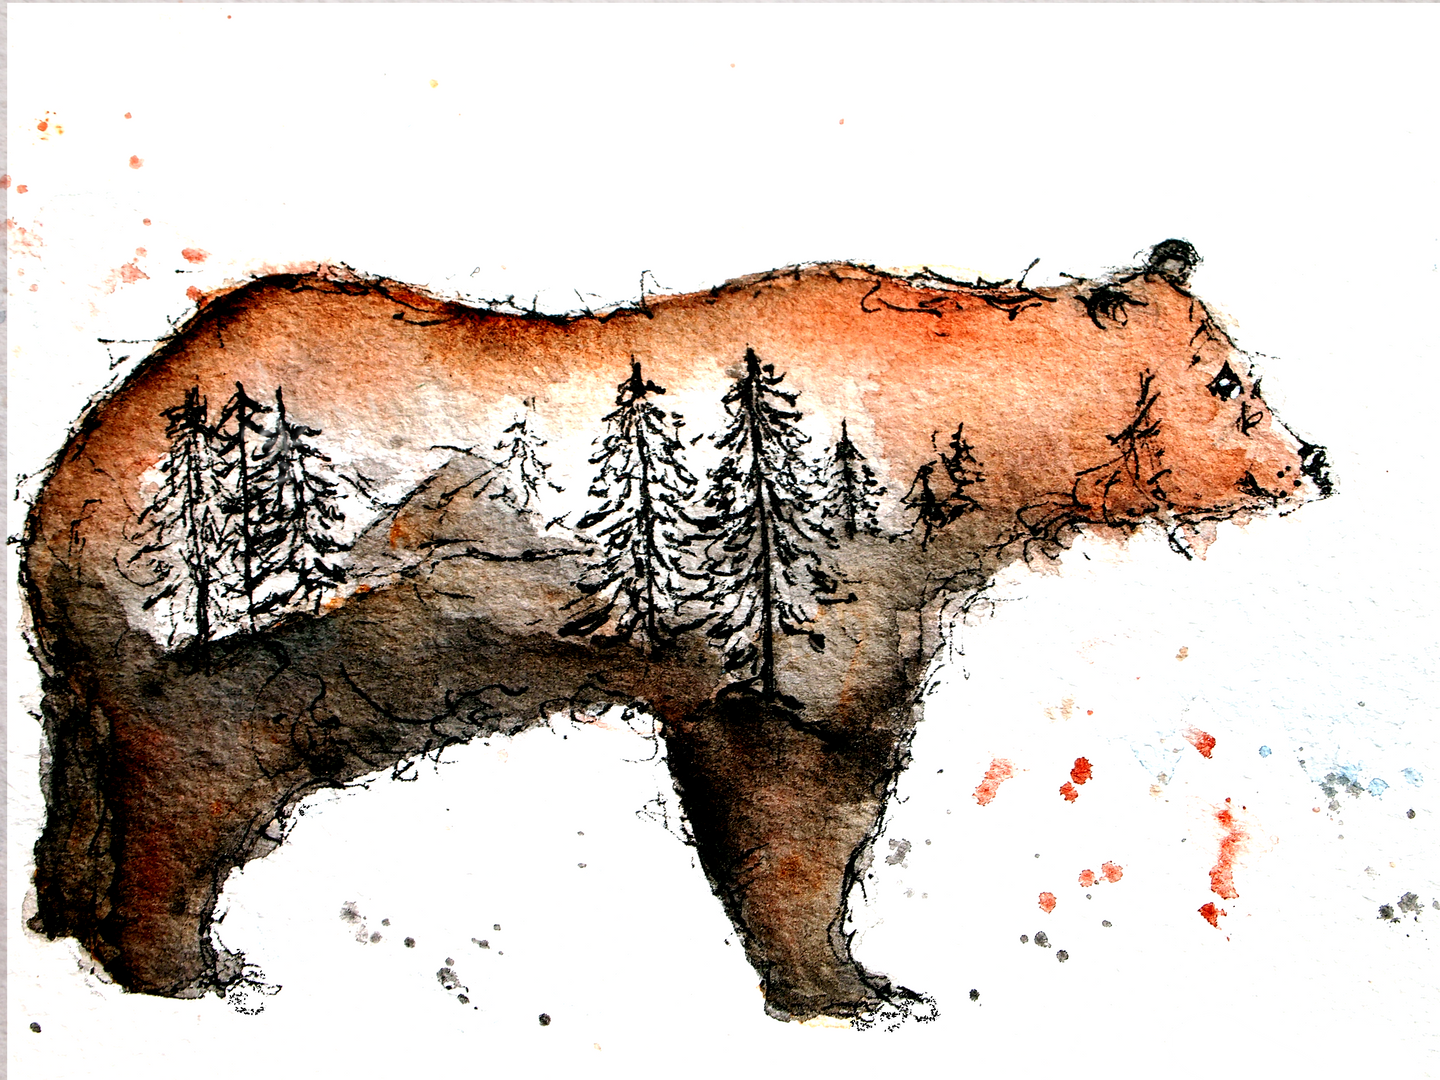 Forest Bear print